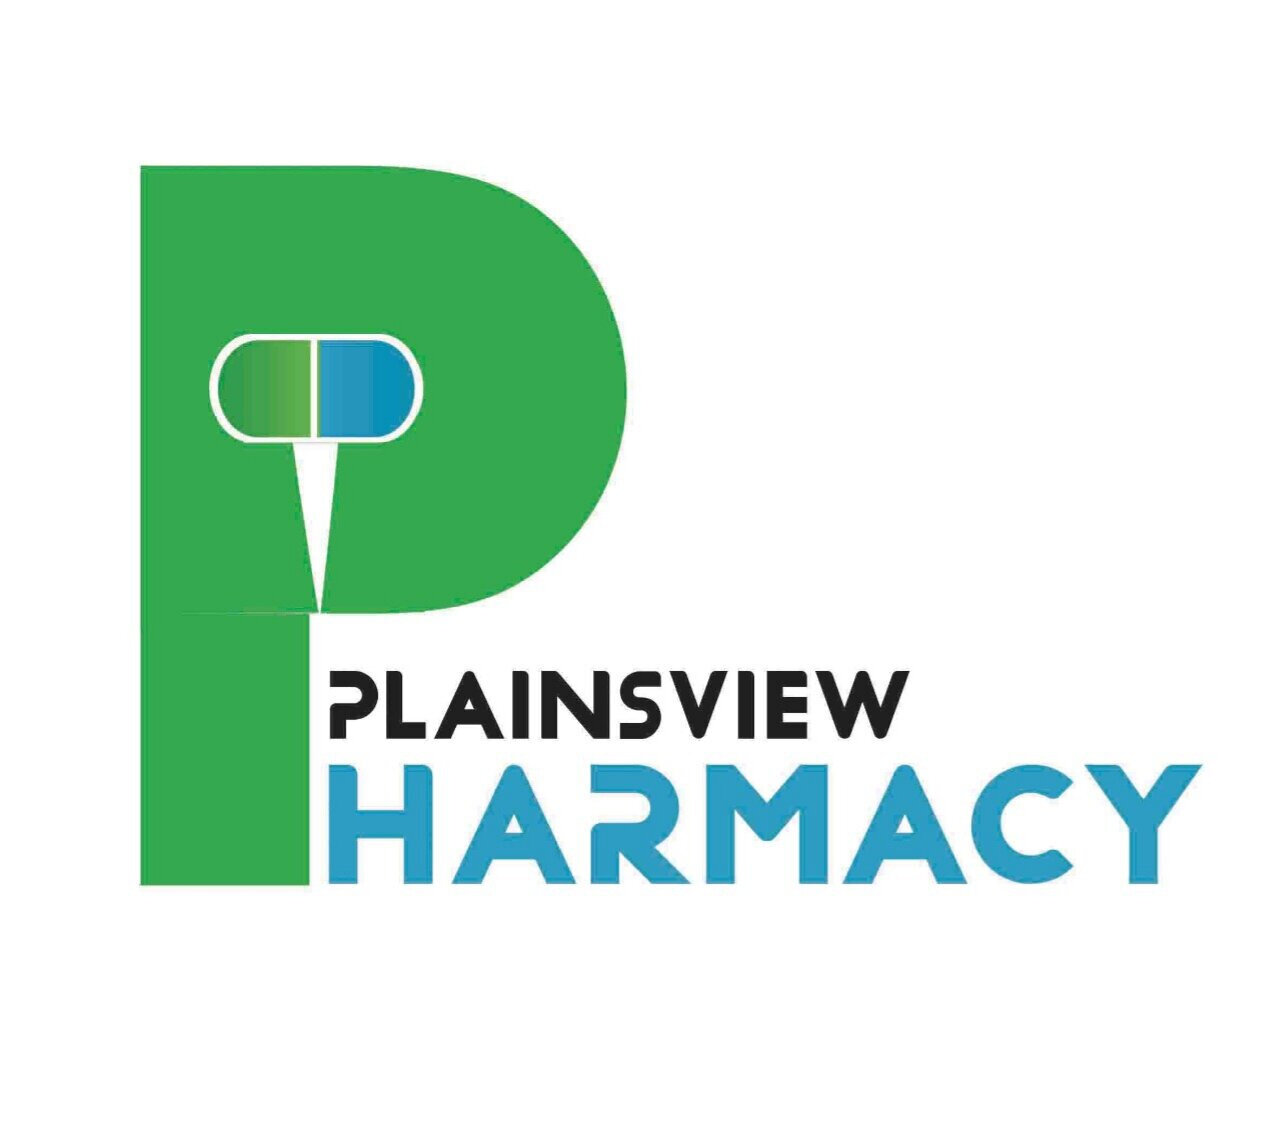 Plainsview pharmacy